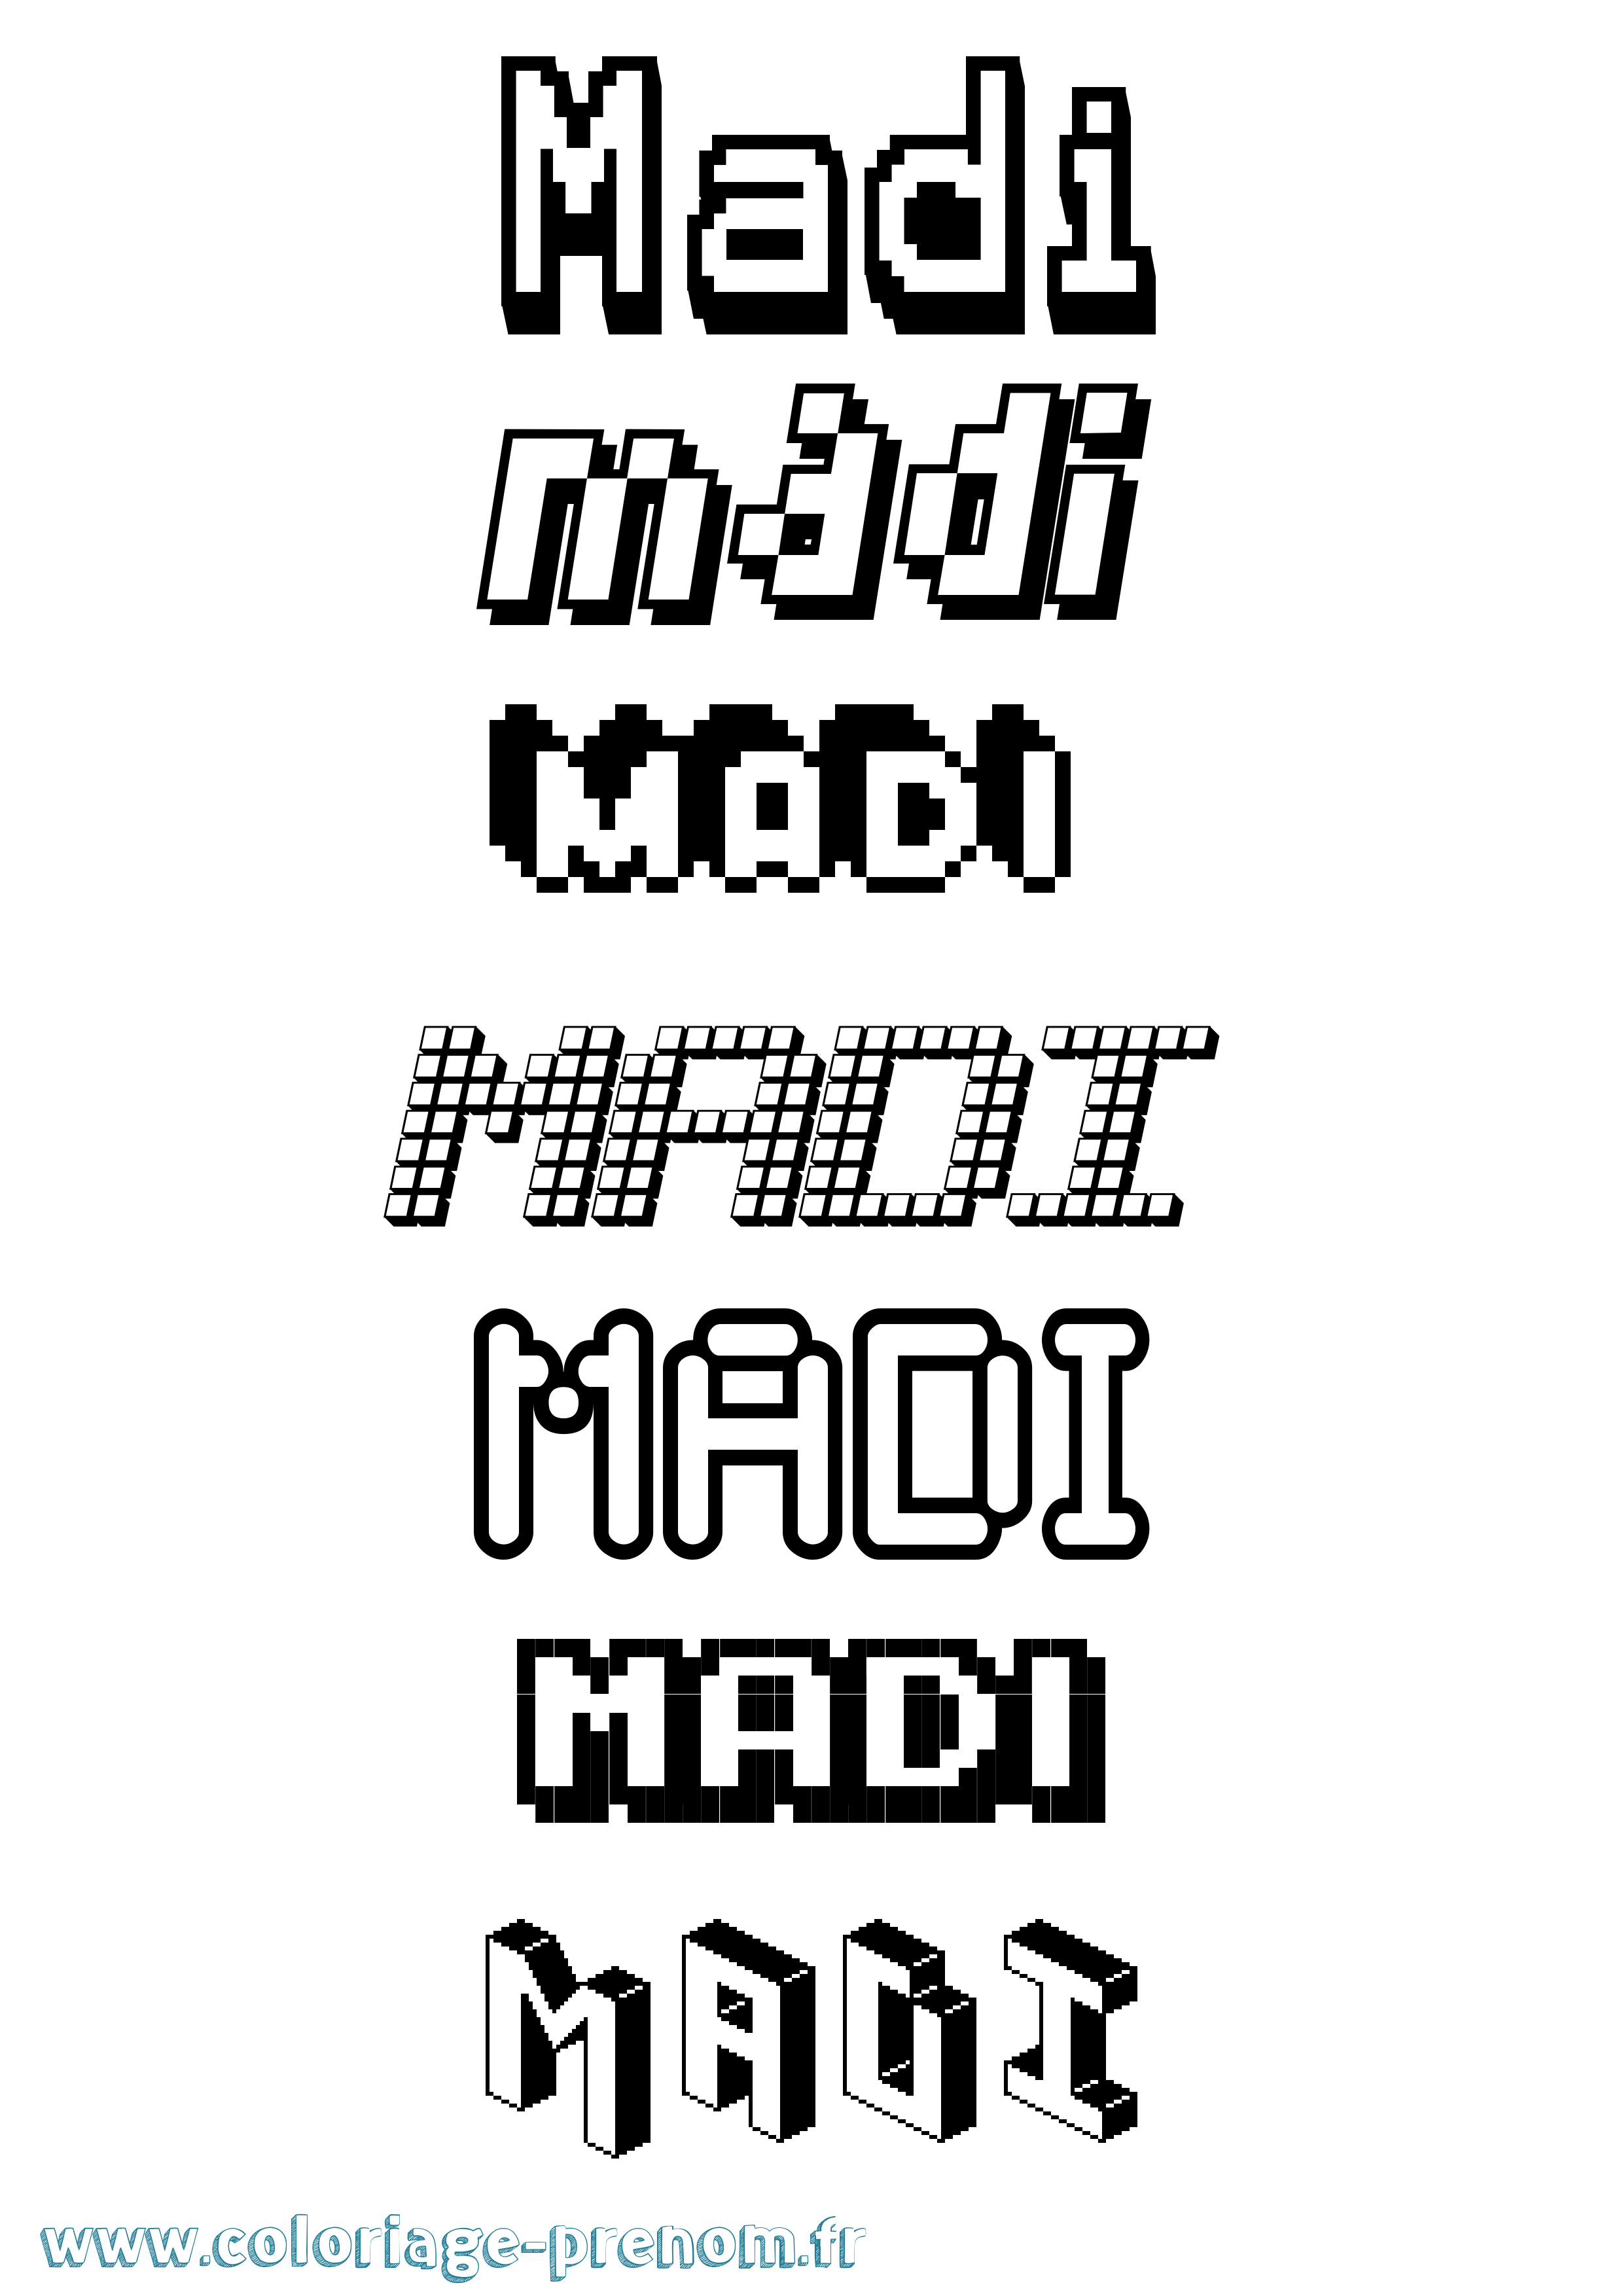 Coloriage prénom Madi Pixel